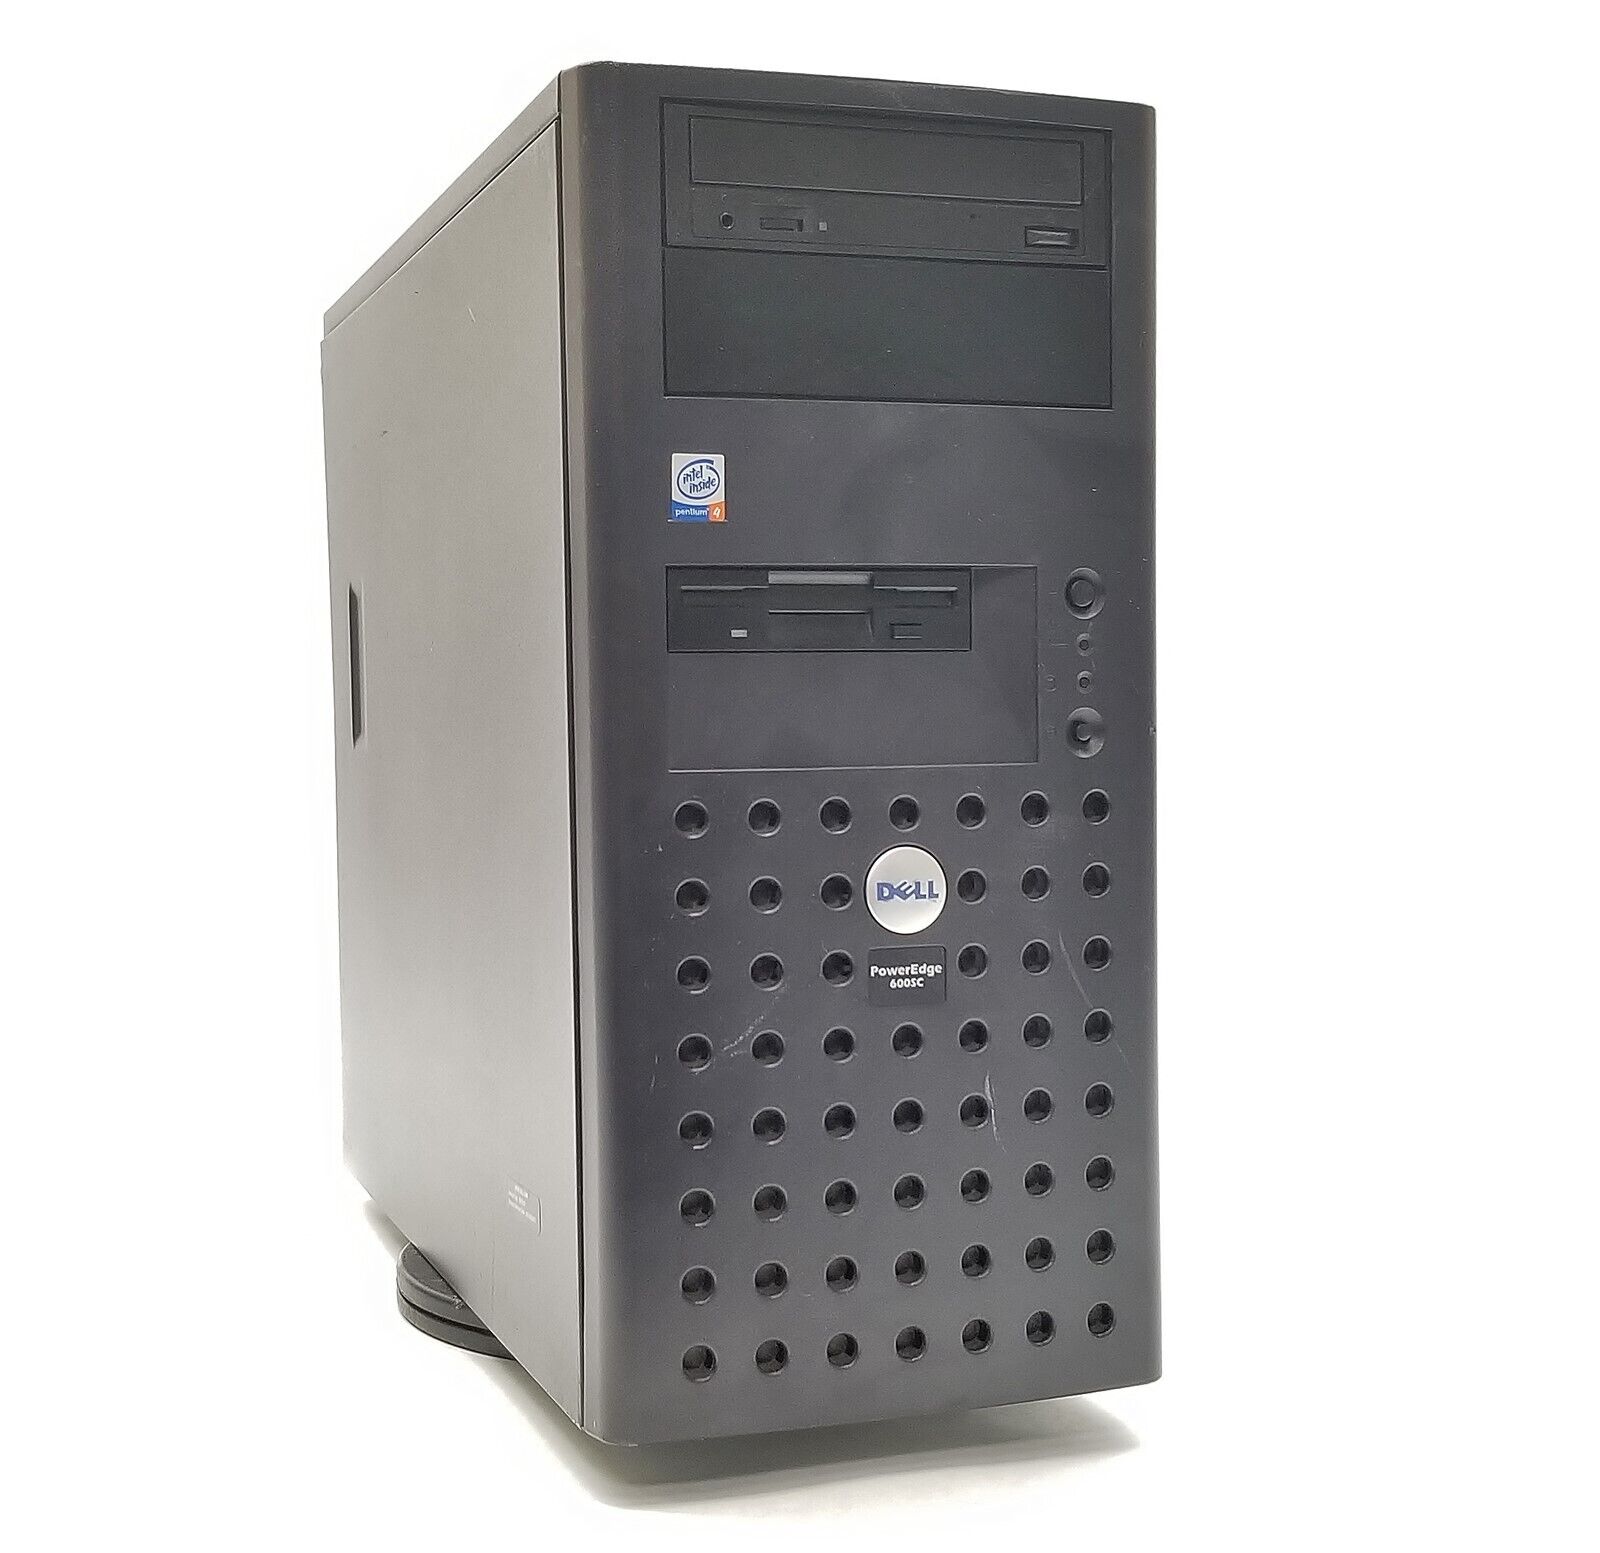 Dell PowerEdge 6005C TWR Pentium 4 2.40GHz 256MB NO/HDD Vintage Server Retro PC